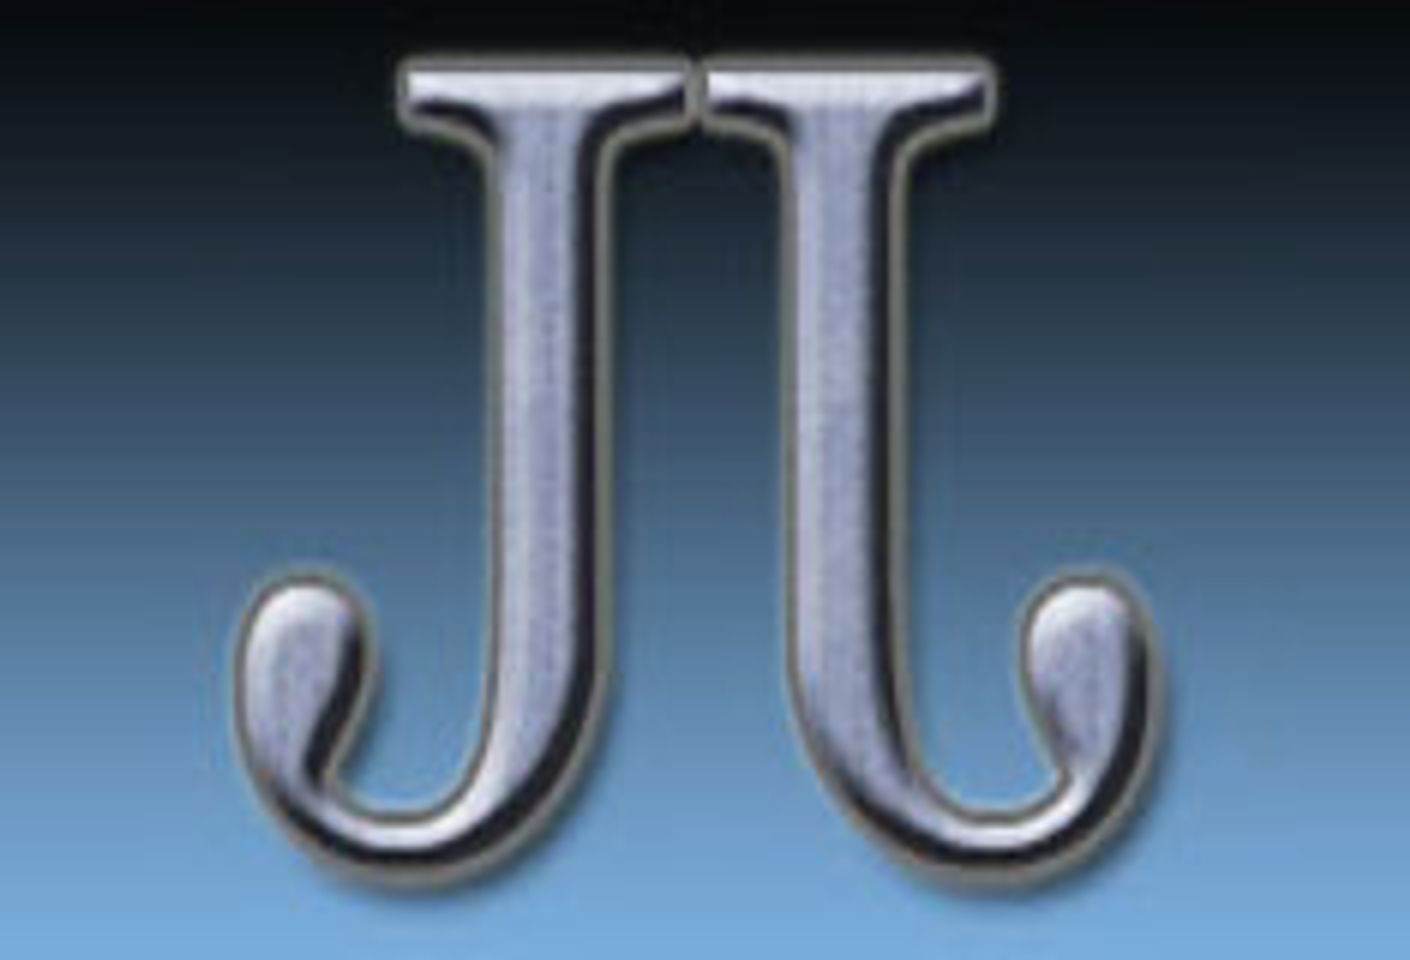 Jules Jordan Video Files Lawsuit Against AdultBouncer.com